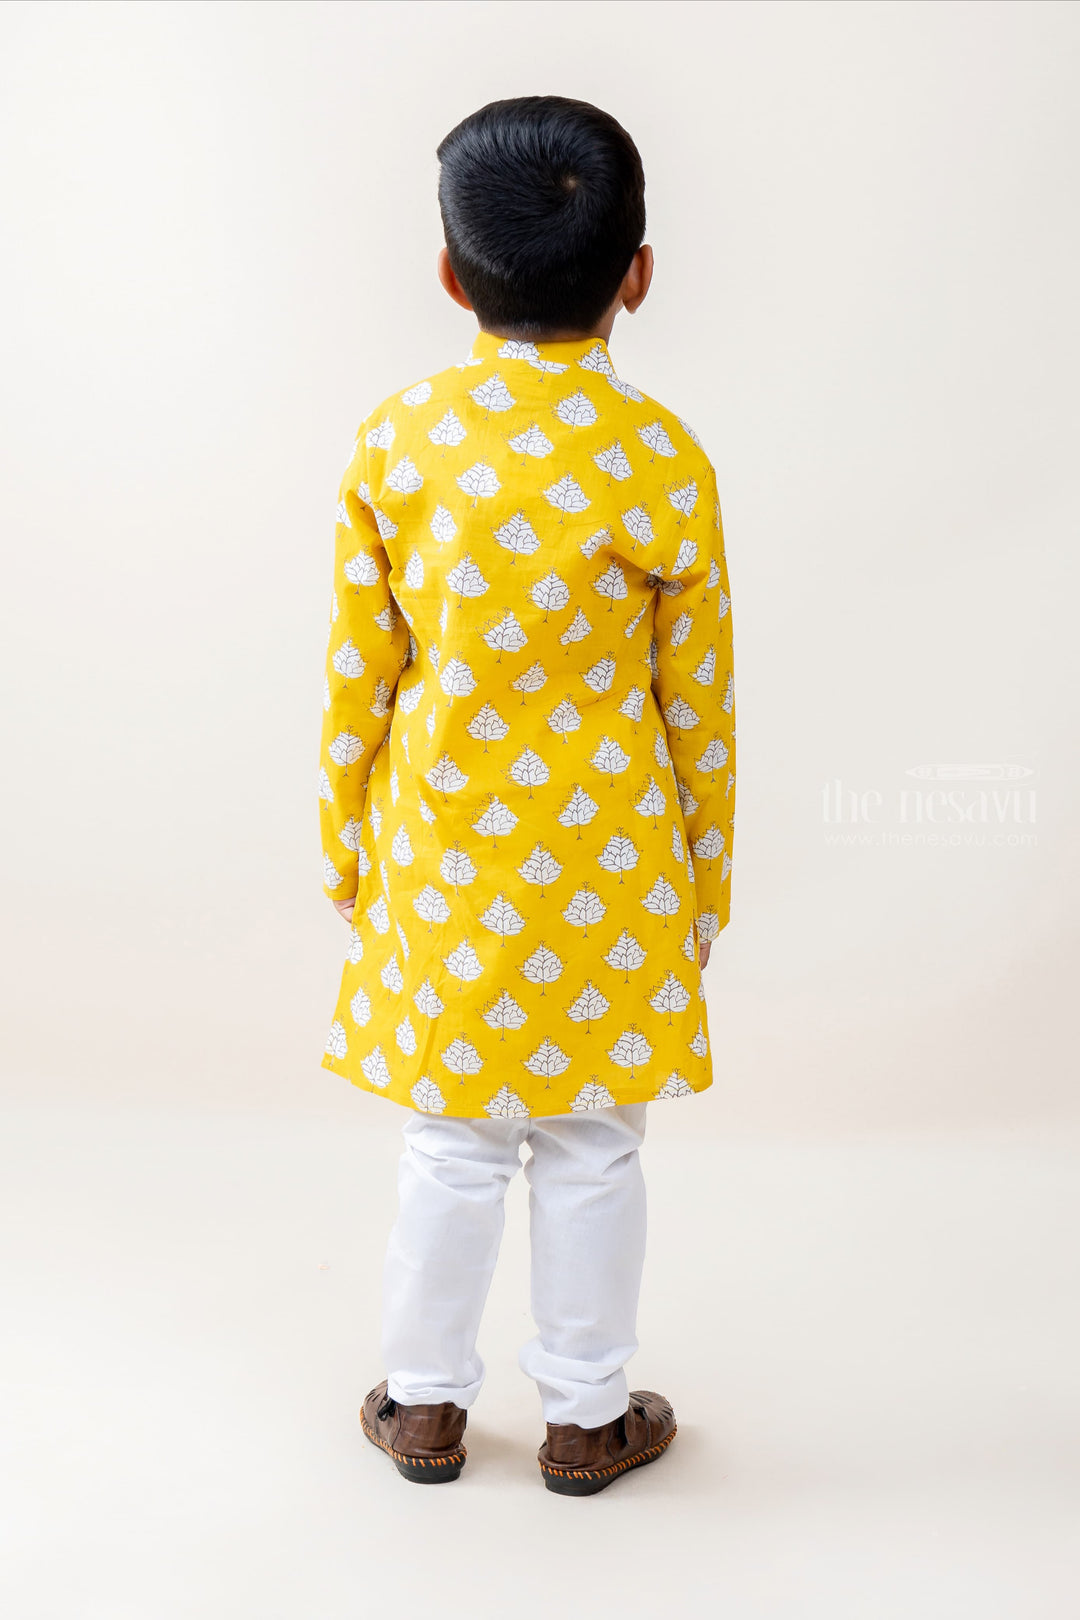 The Nesavu Ethnic Sets Lucky Charm - Pleasing Mustard Yellow Kurta And White Cotton Pants psr silks Nesavu